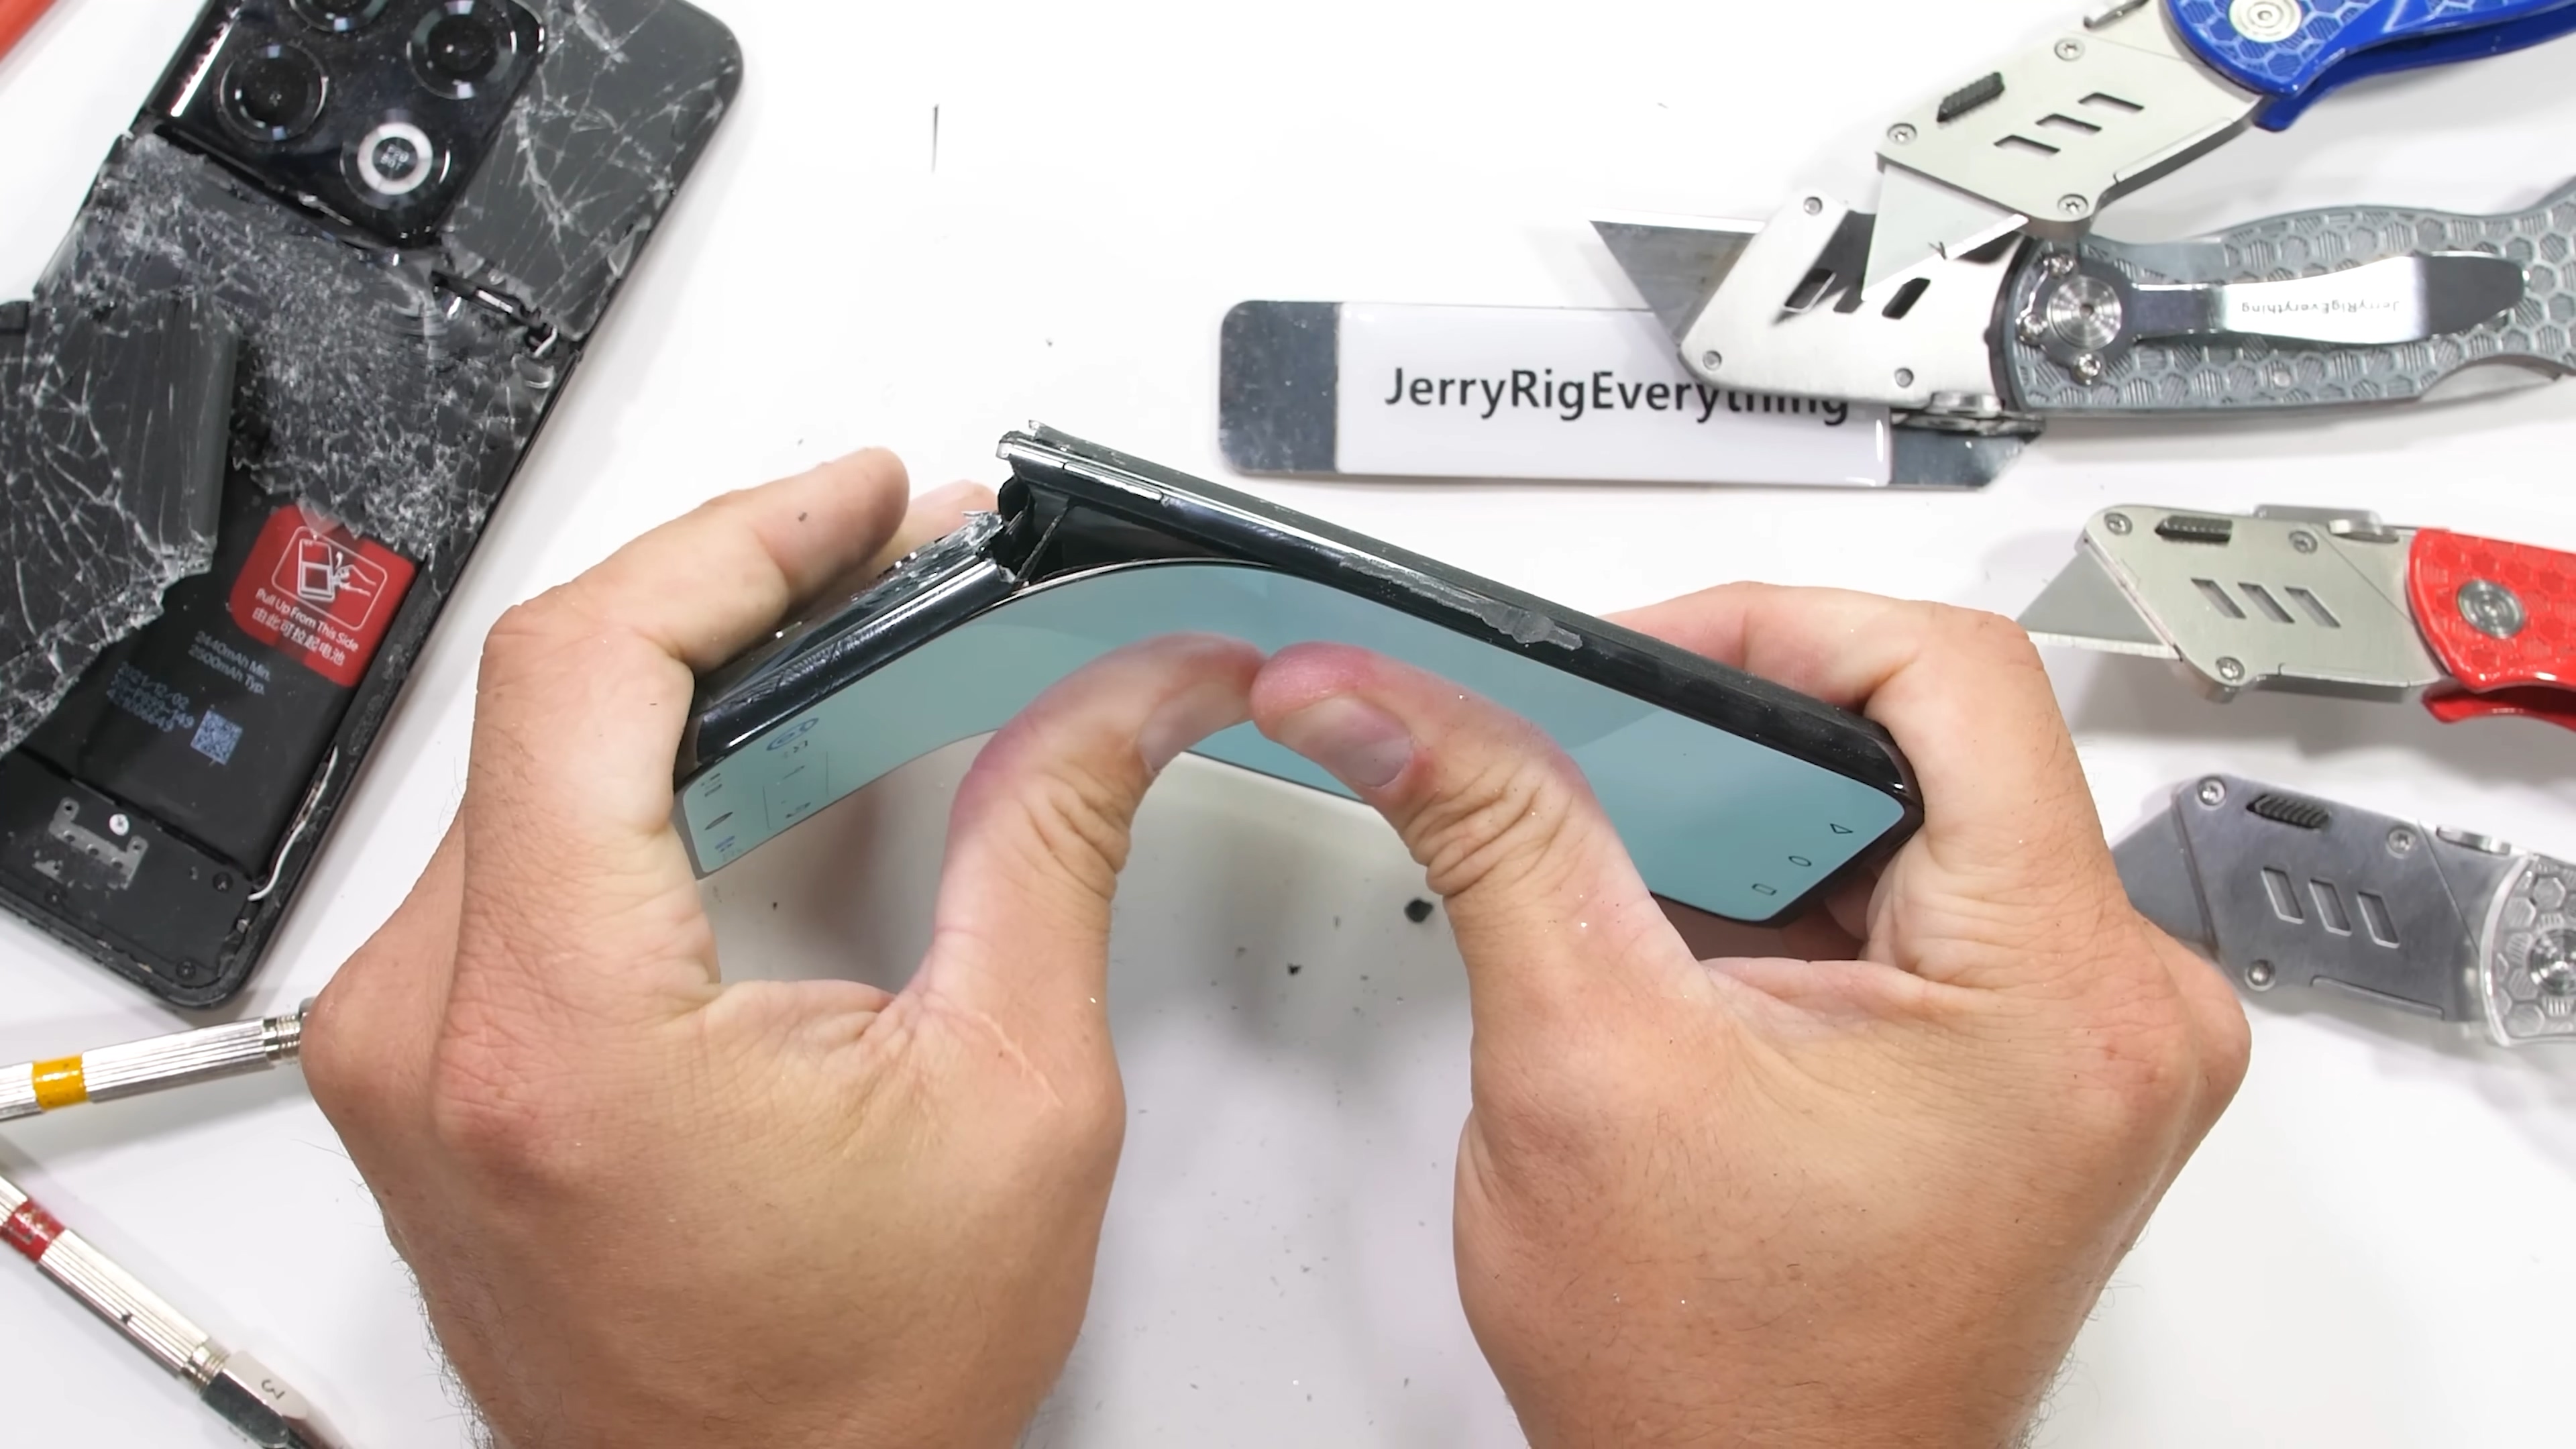 Has OnePlus Fixed their Newest Phone_ - Durability Test!_20220824_112846.358.jpg